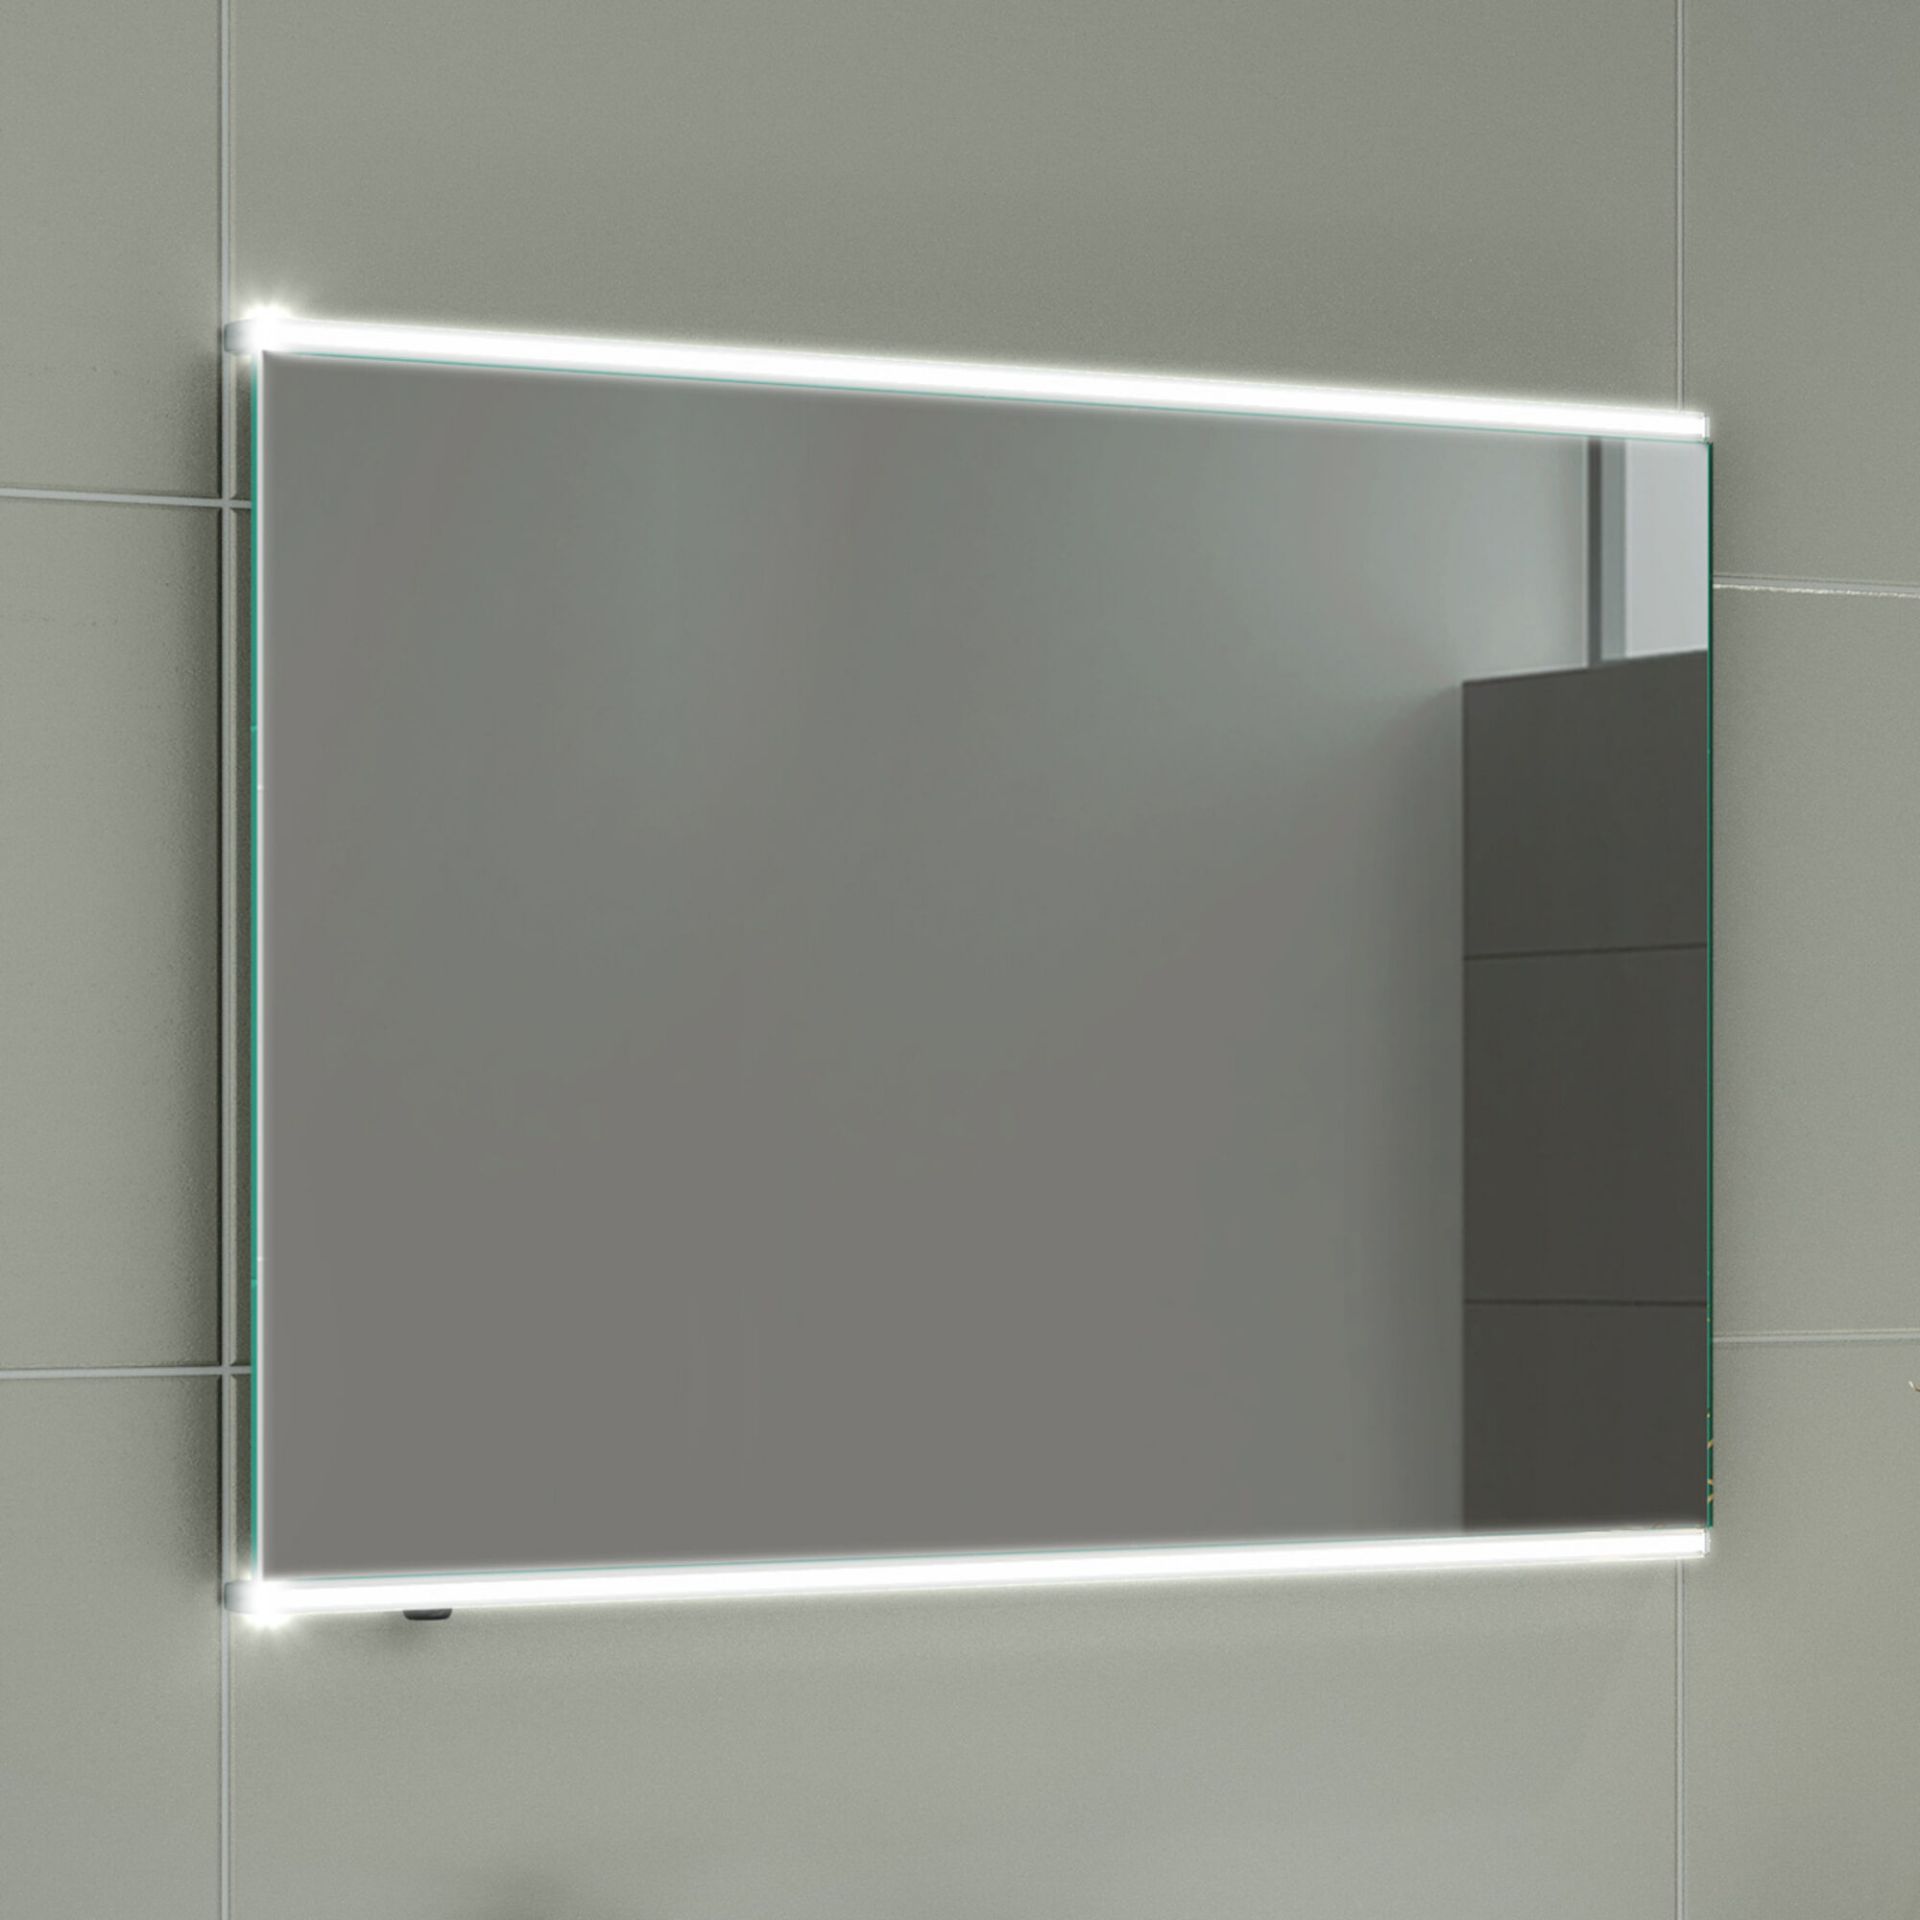 (PT86) 450x600mm Denver Illuminated LED Mirror. RRP £332.99. Energy efficient LED lighting with IP44